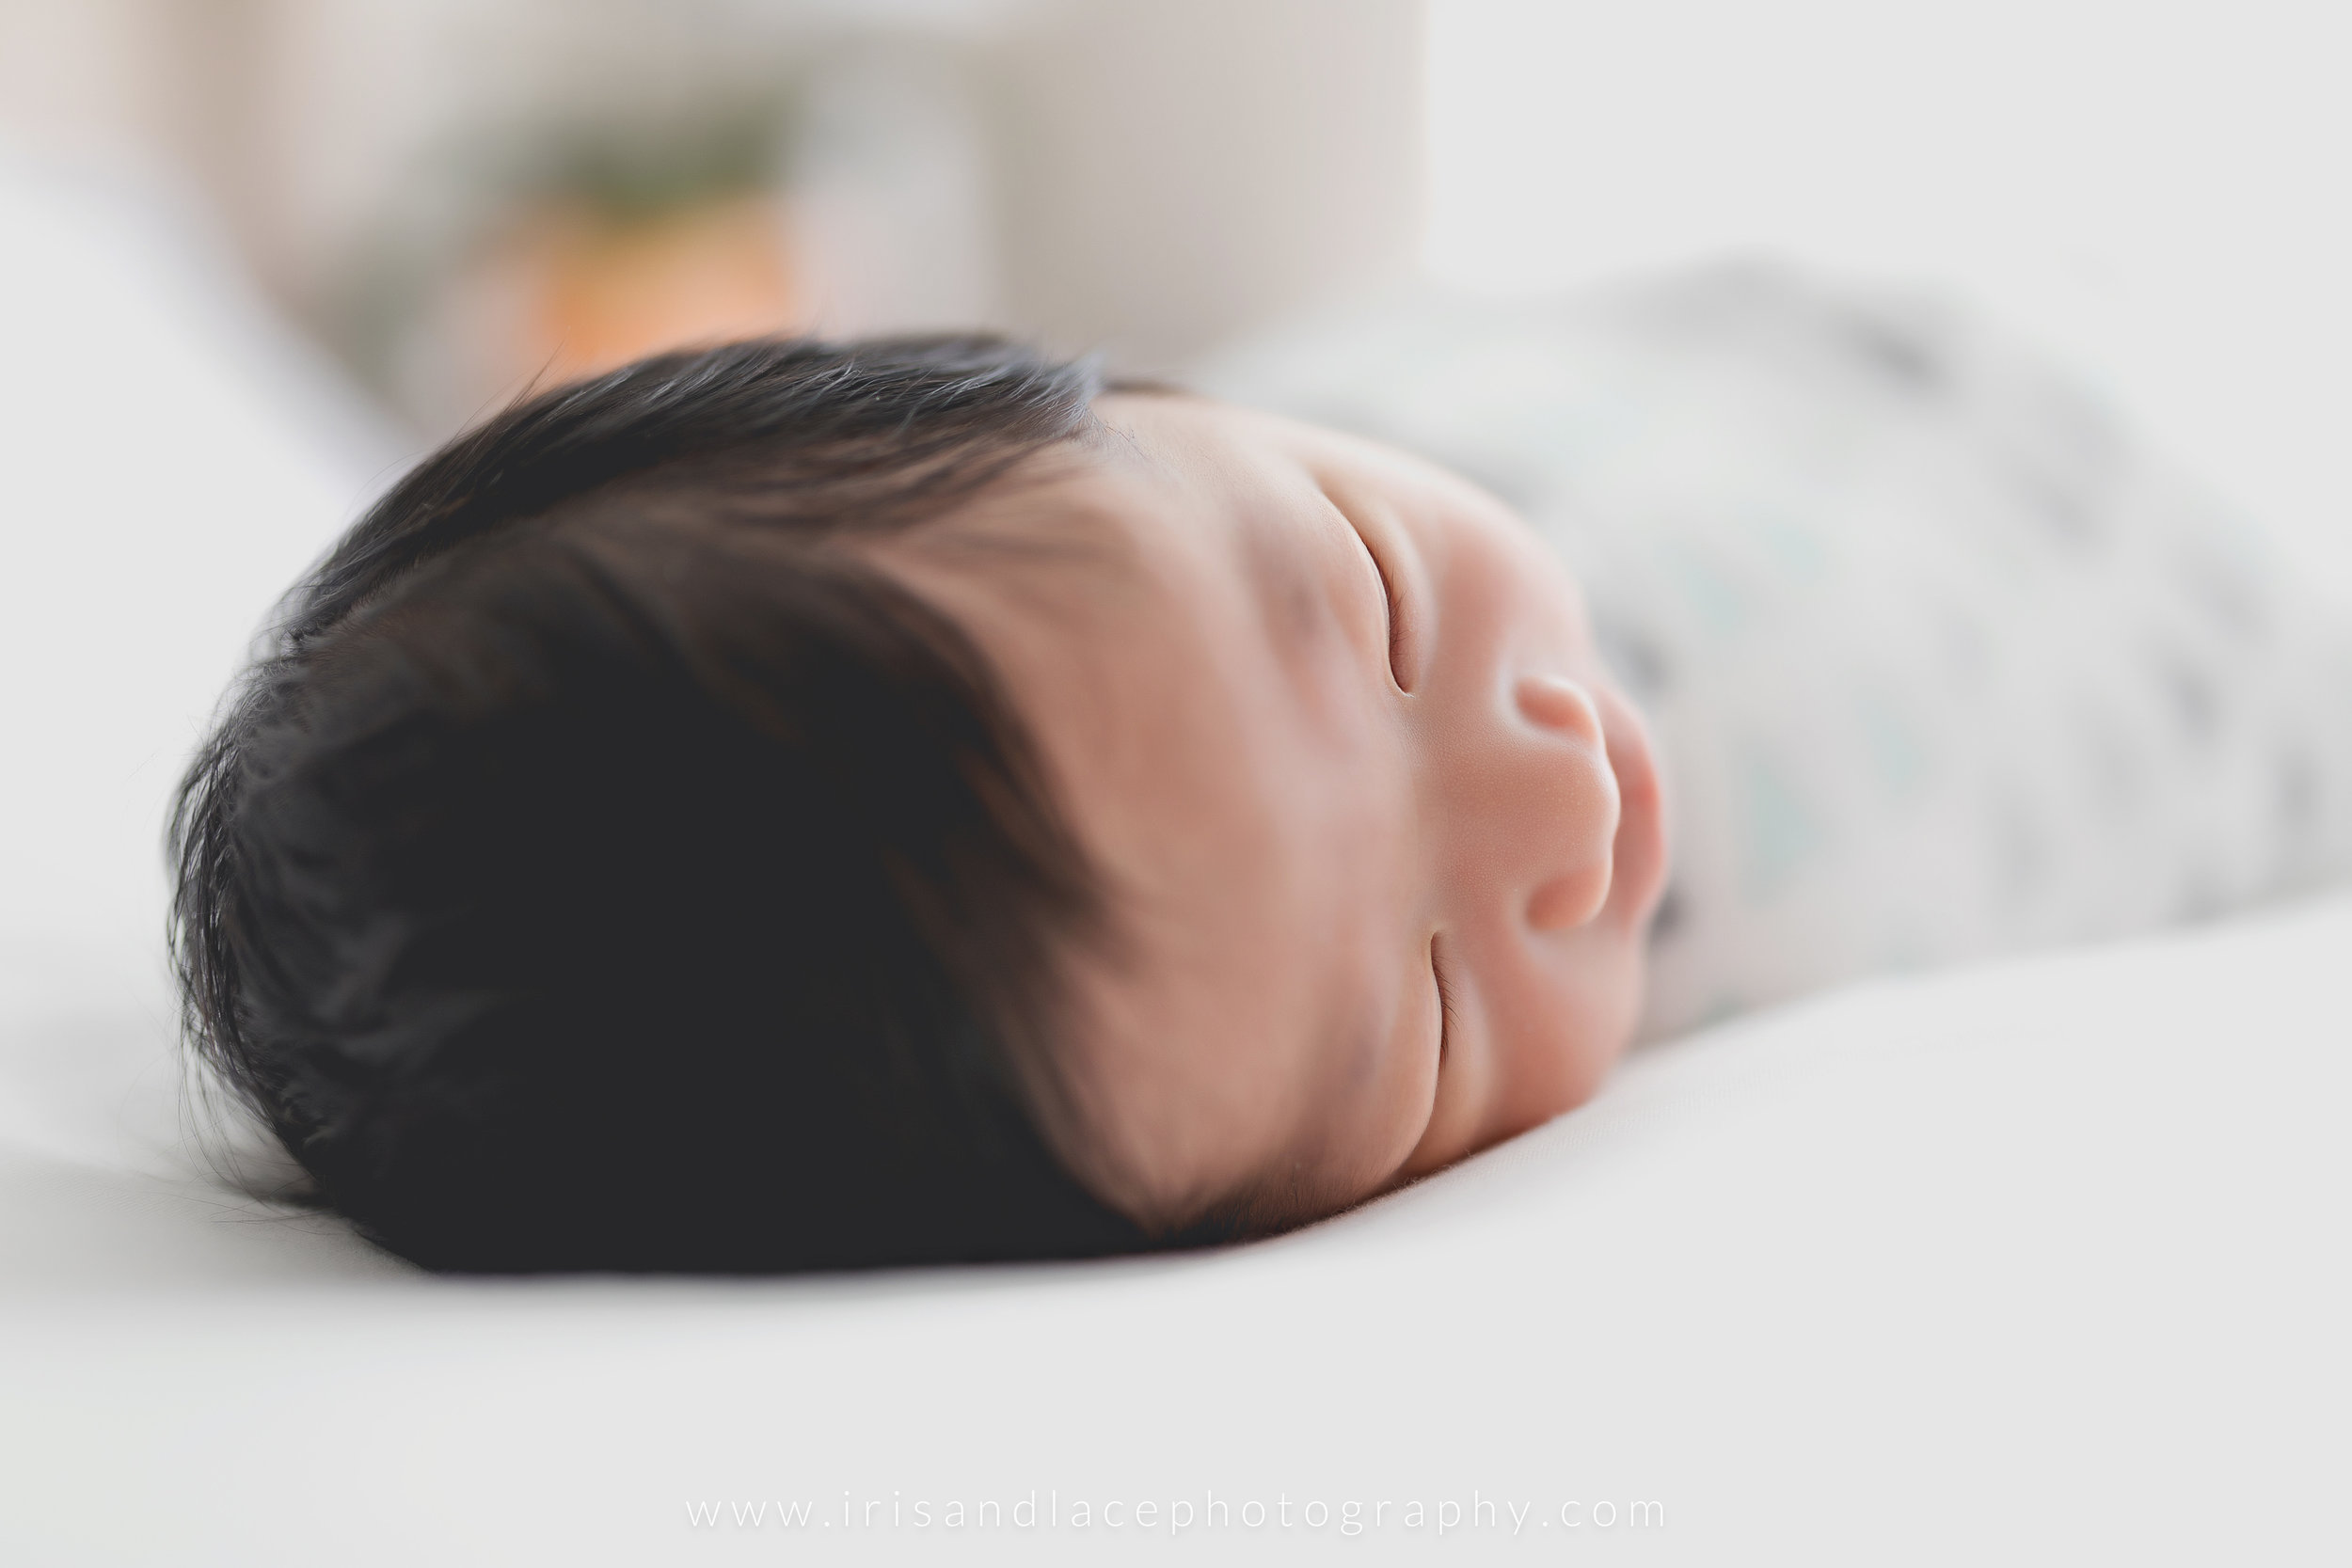 SF Peninsula Newborn Photography  |  Iris and Lace Photography  |  Lifestyle Family Photos